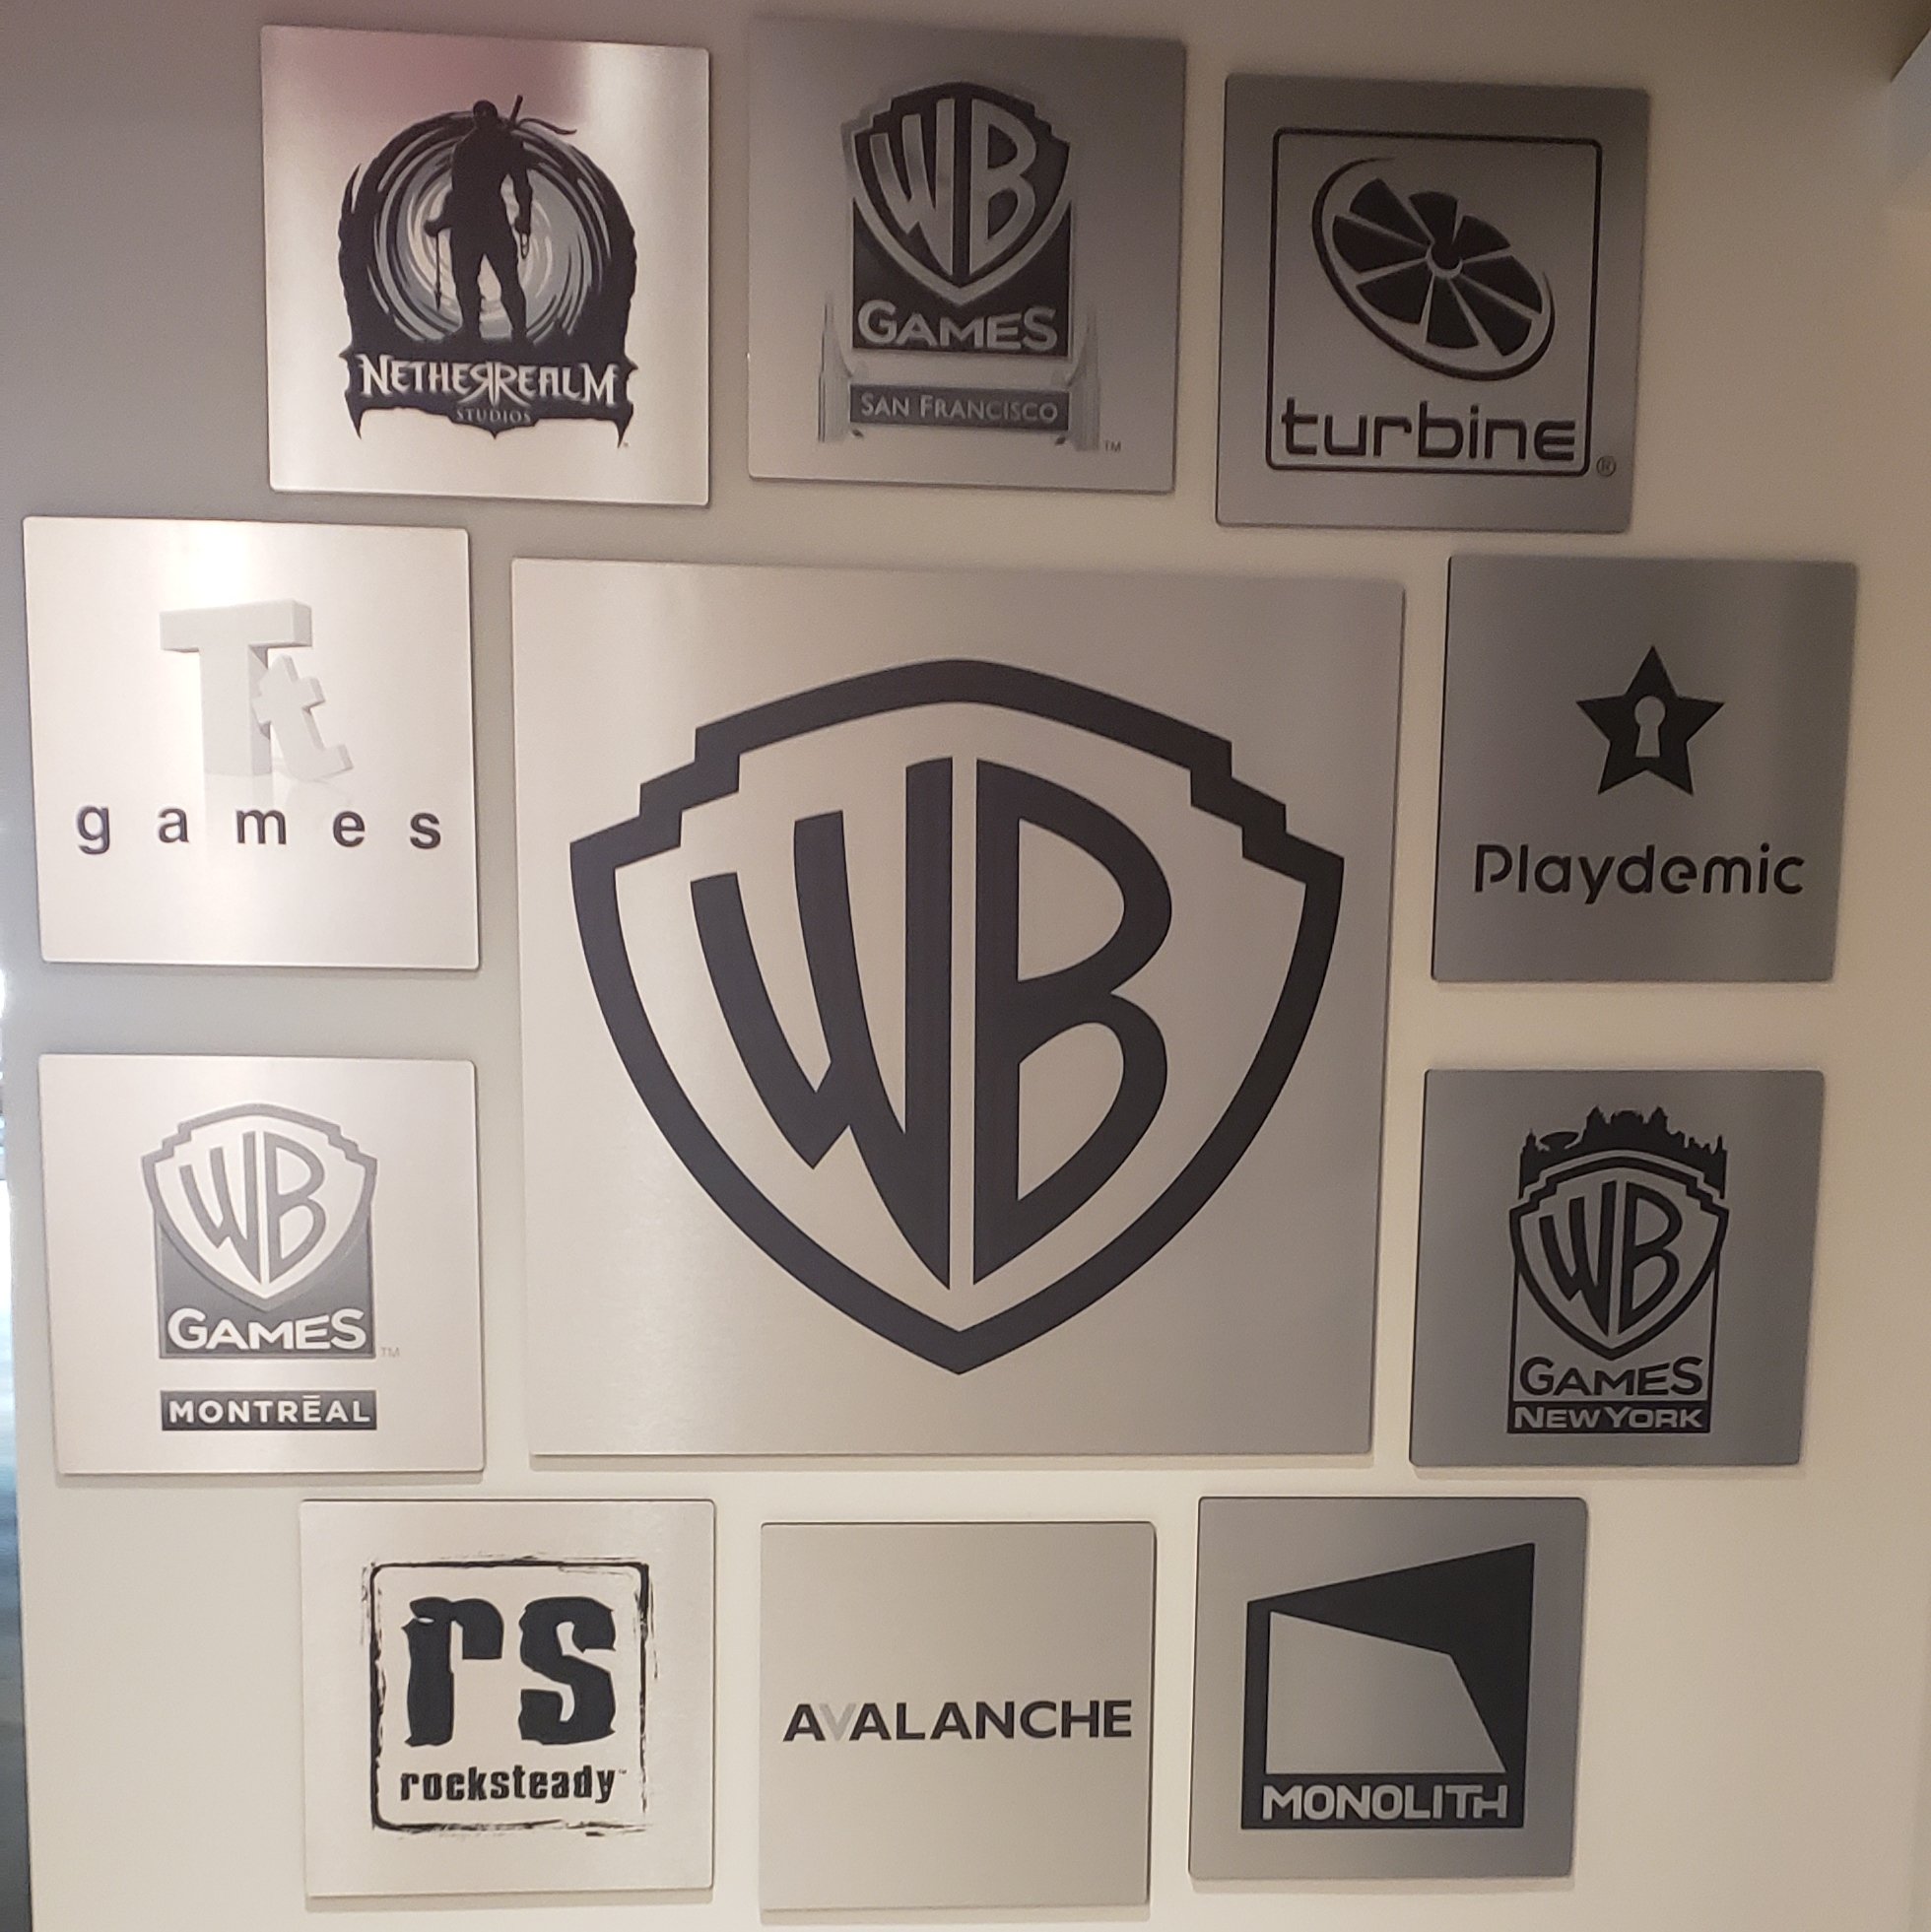 Warner Bros. Games New York